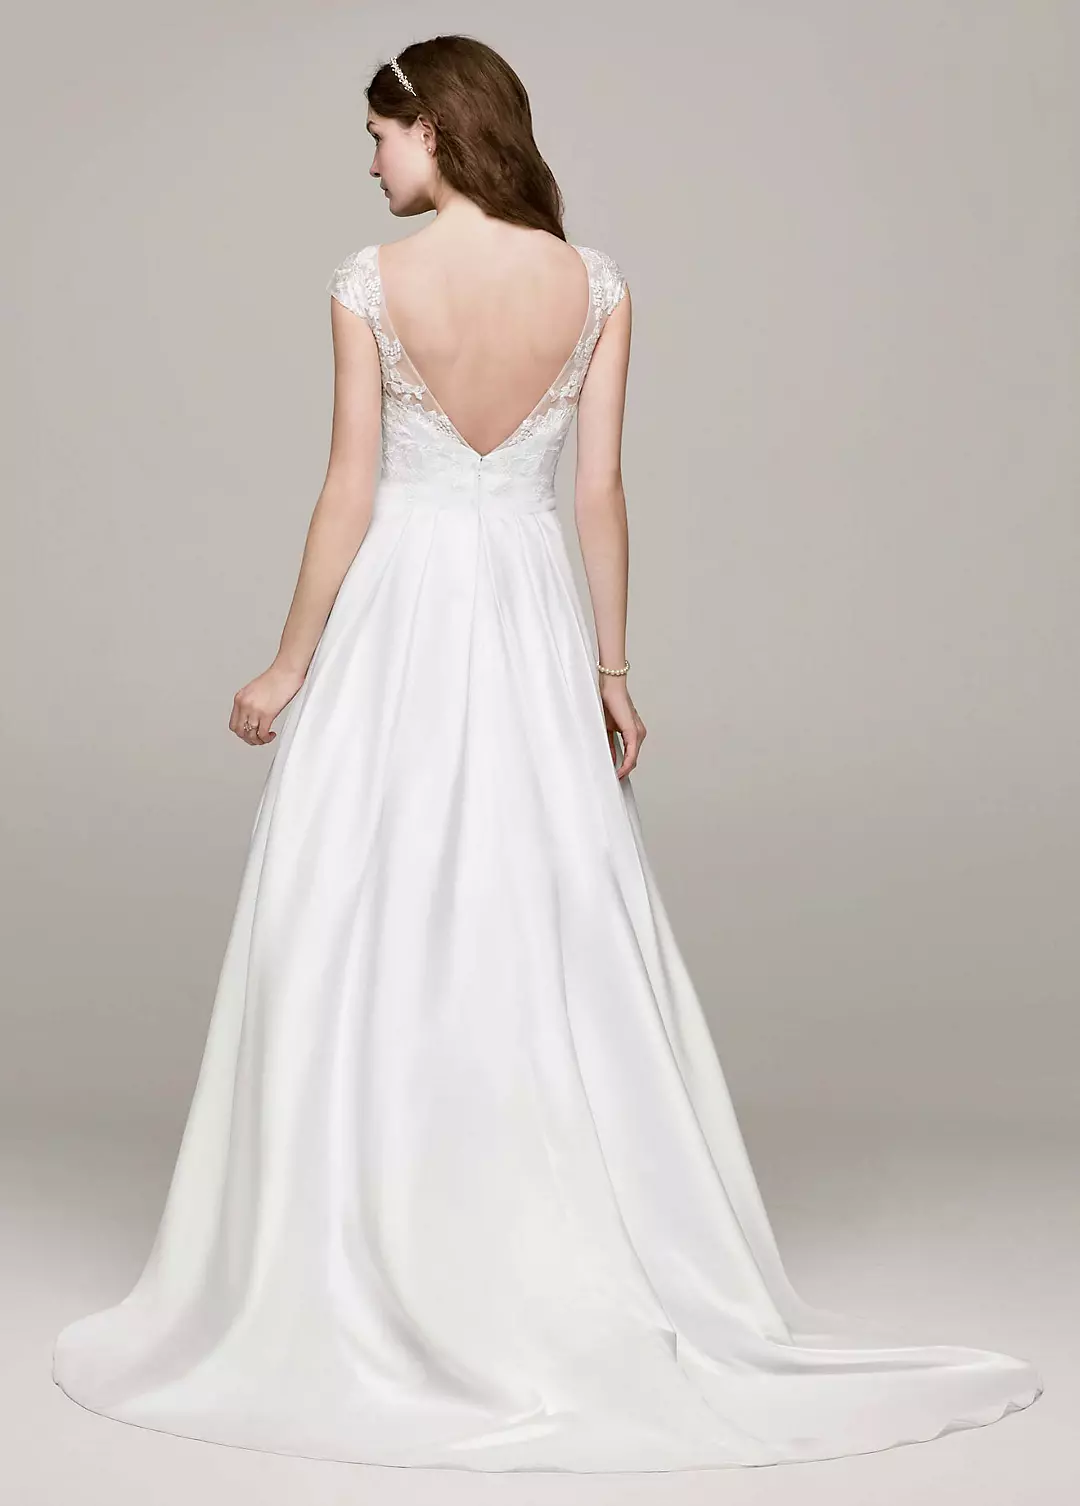 Cap Sleeve Wedding Dress with Illusion Neckline  Image 2